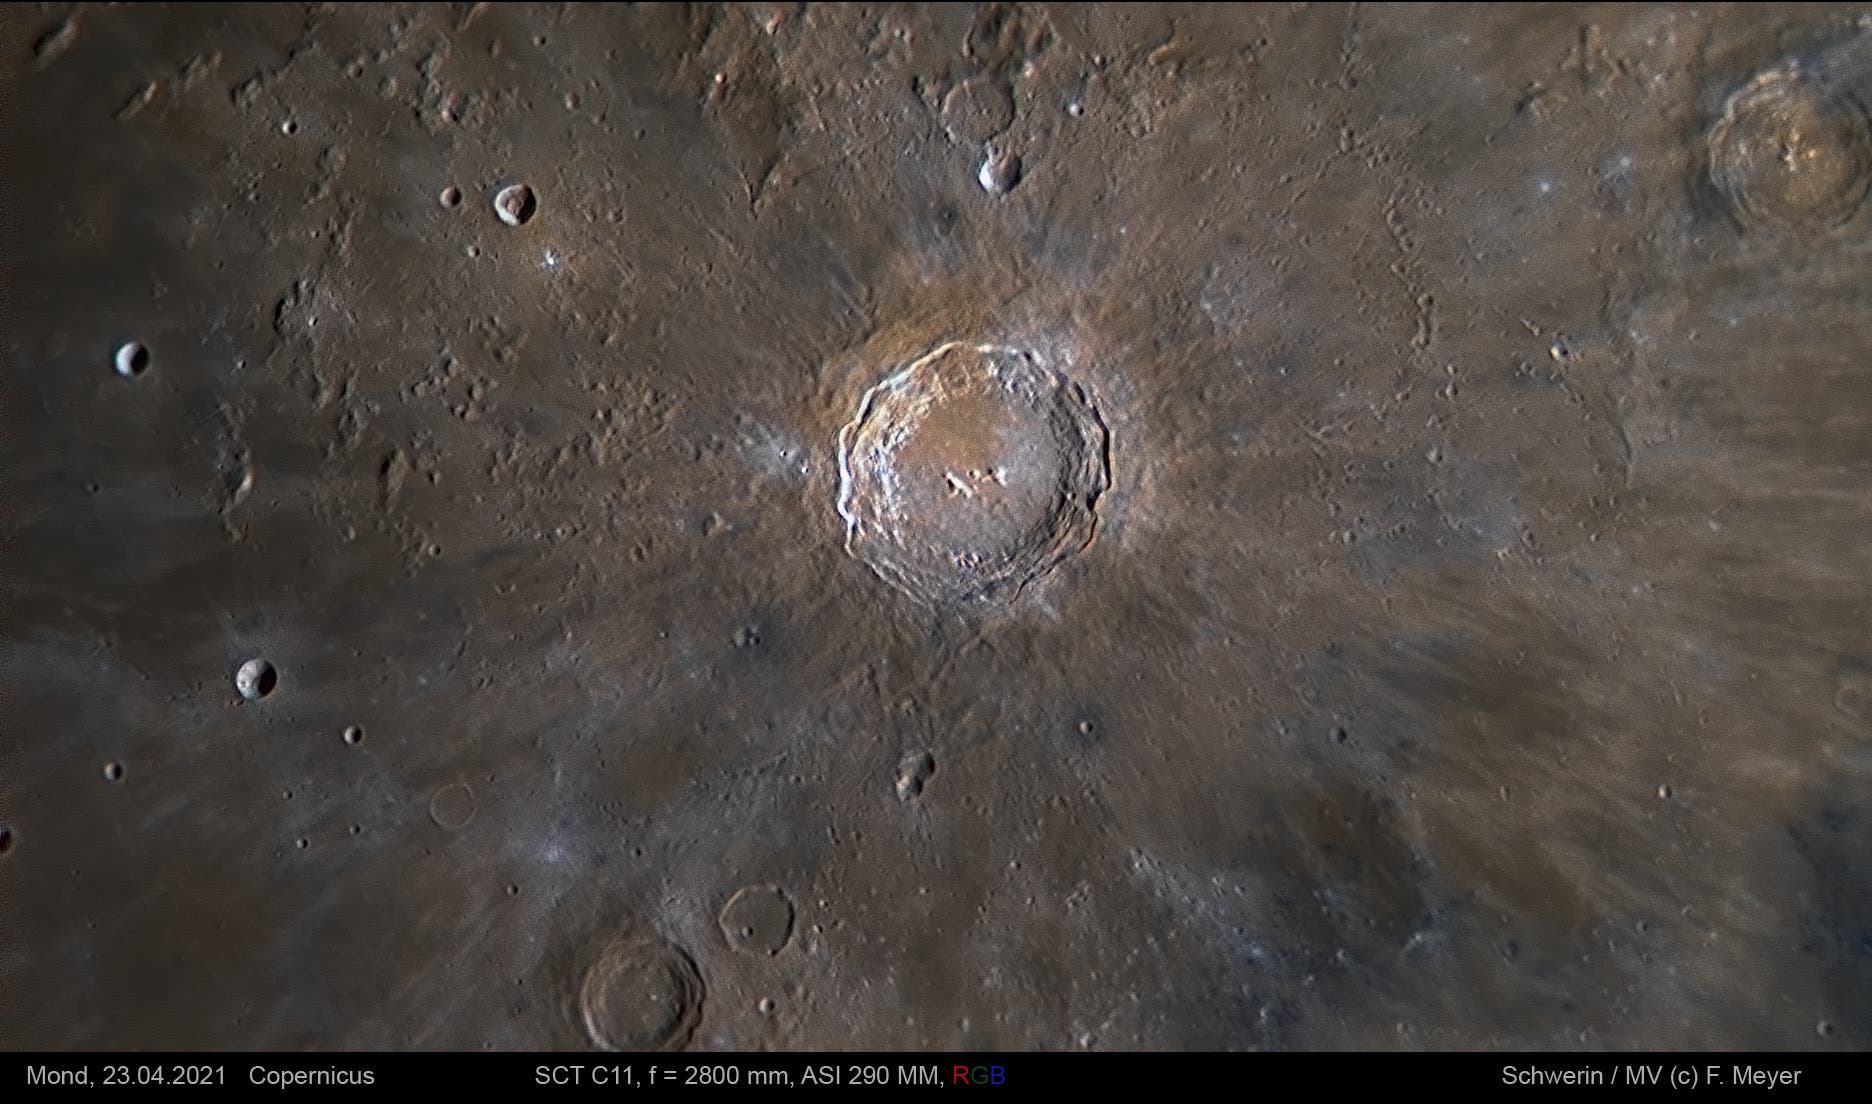 Farbiger Mond - Copernicus am 23. April 2021